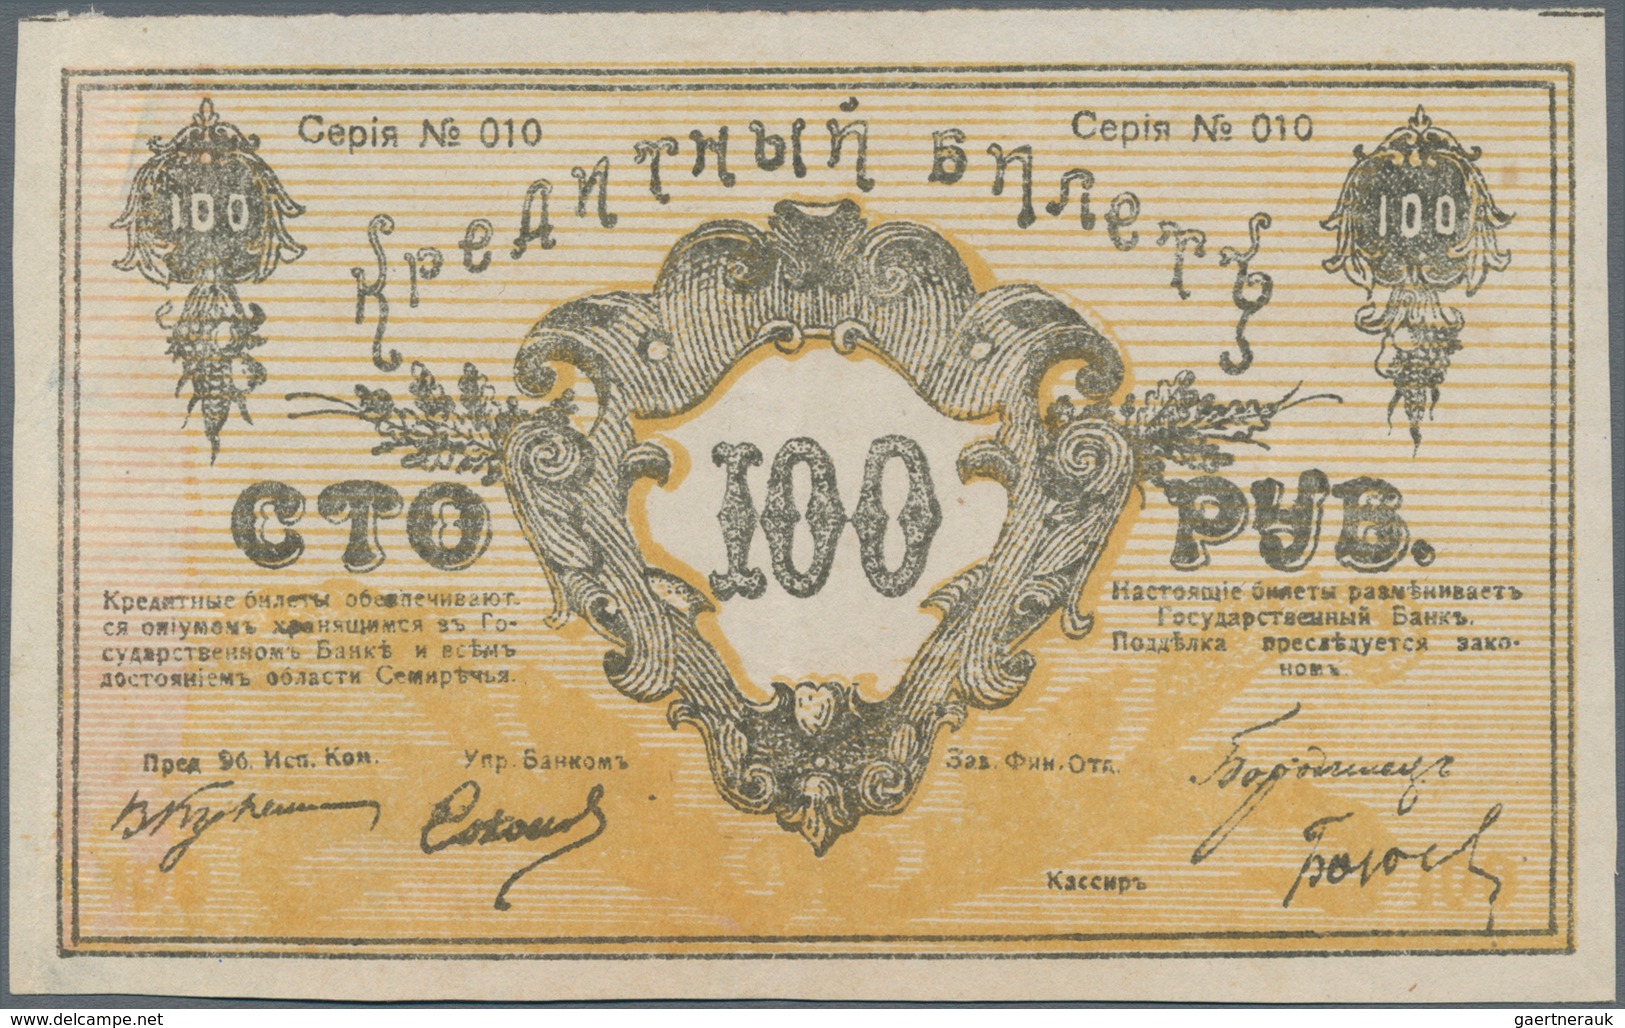 Russia / Russland: Central Asia - Semireche Region 100 Rubles 1919, Front Proof, P.S1131p (R. 20615a - Russia